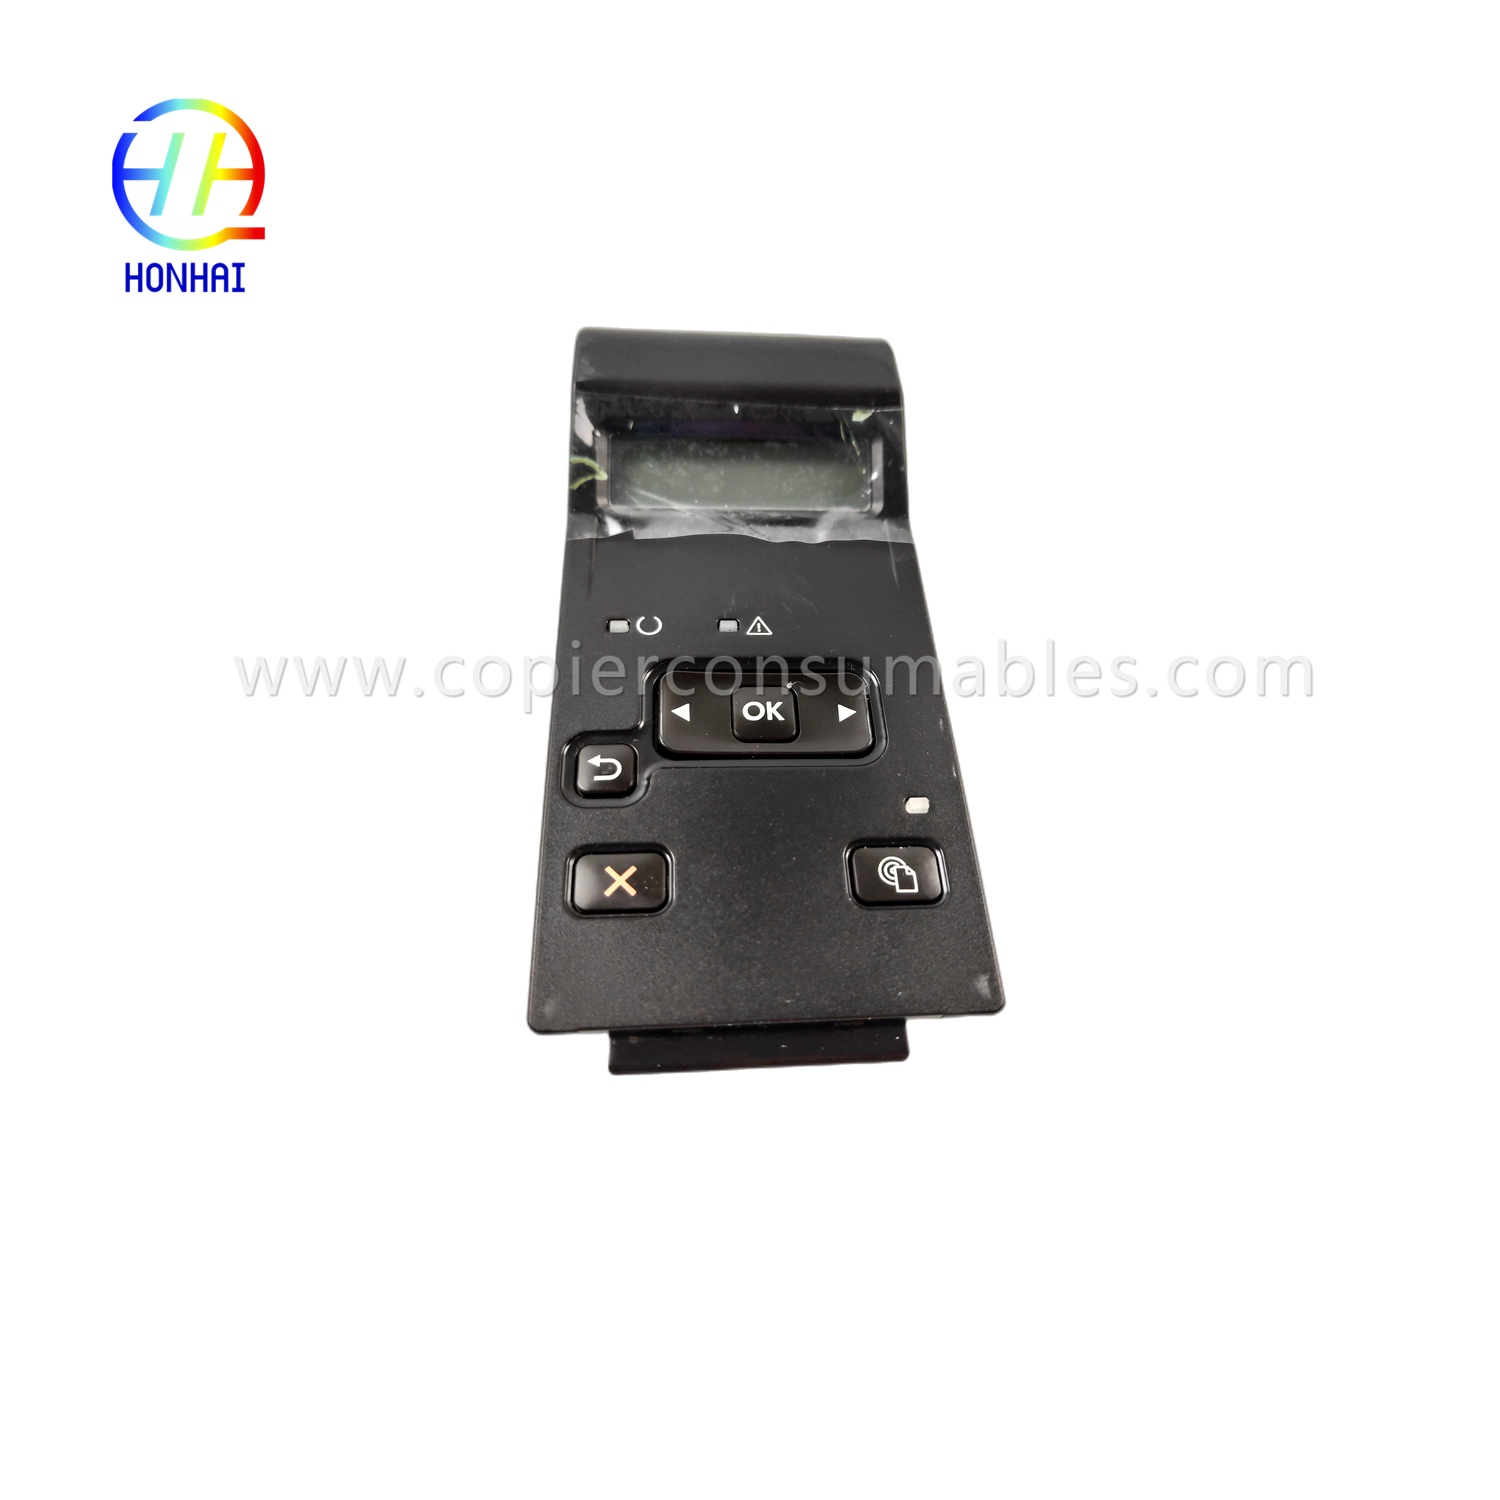 Pannello di controllo touch screen per HP LaserJet 400 M401d M401dn M401n M401 m401 401d 401dn 401n (1)